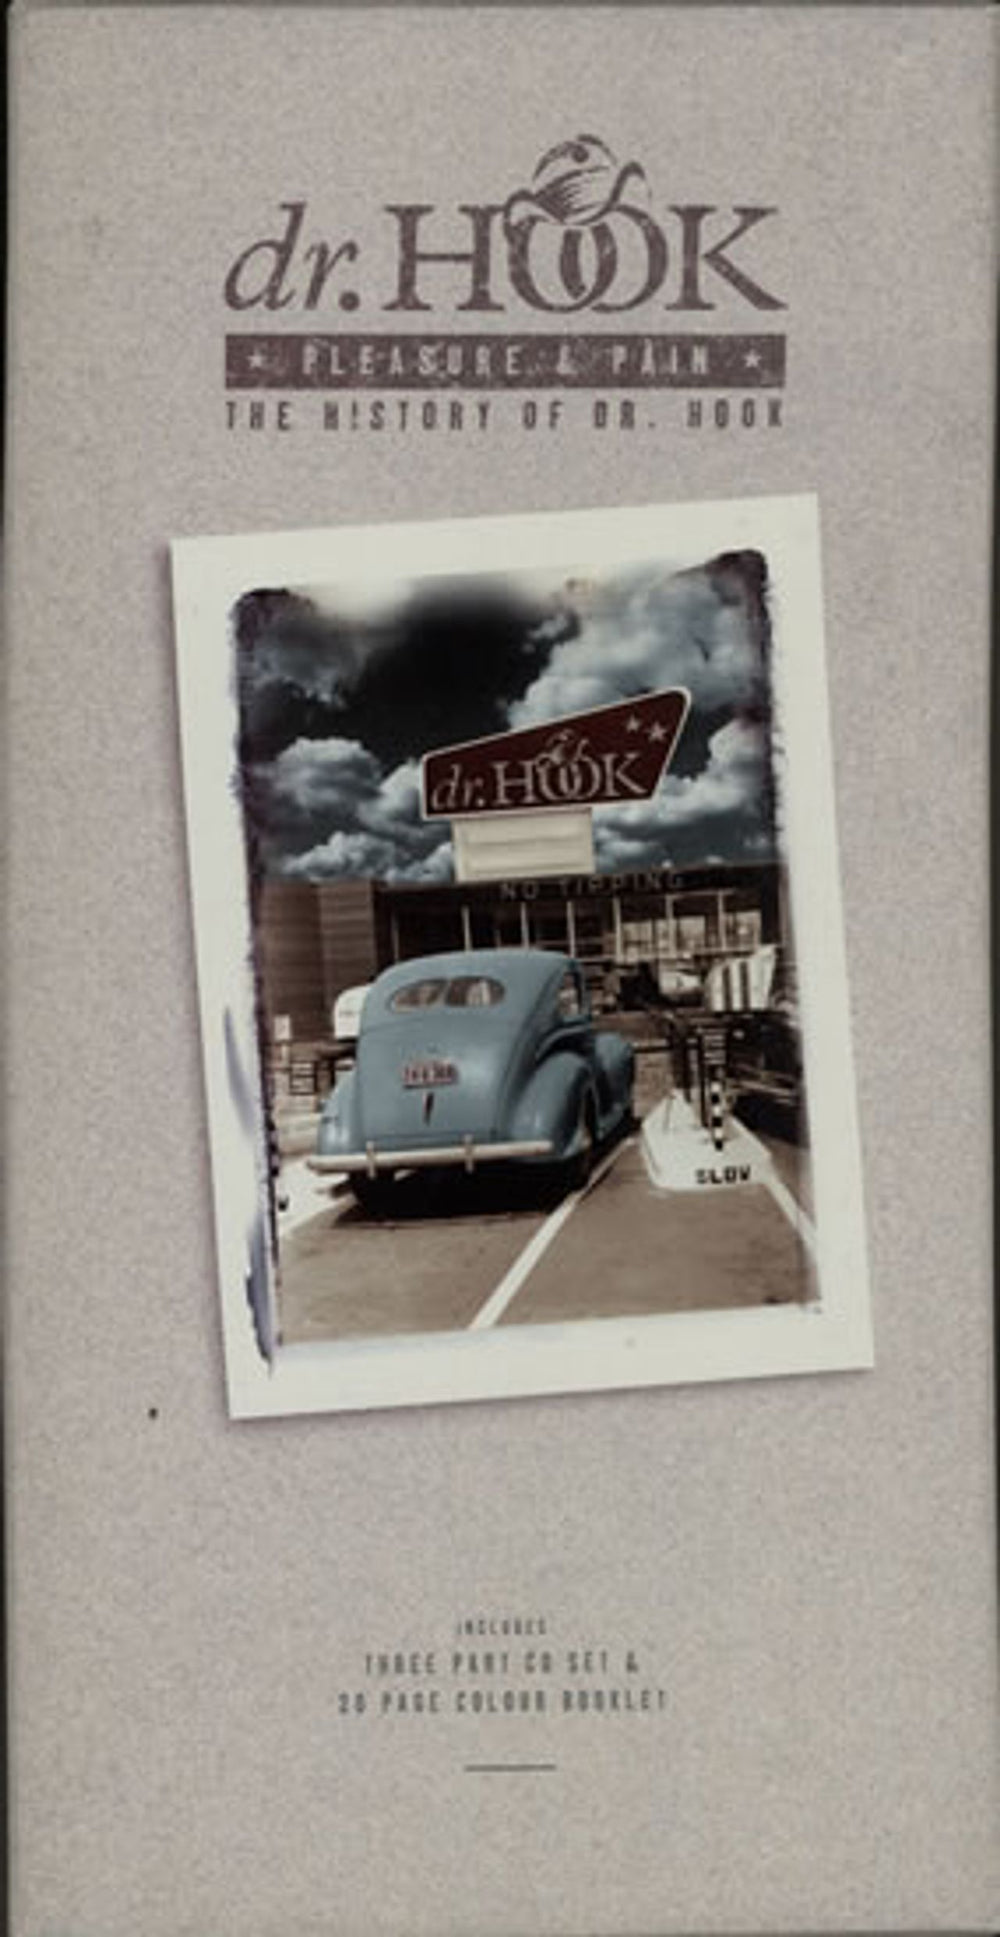 Dr Hook Pleasure & Pain - The History Of Dr. Hook UK Cd album box set —  RareVinyl.com